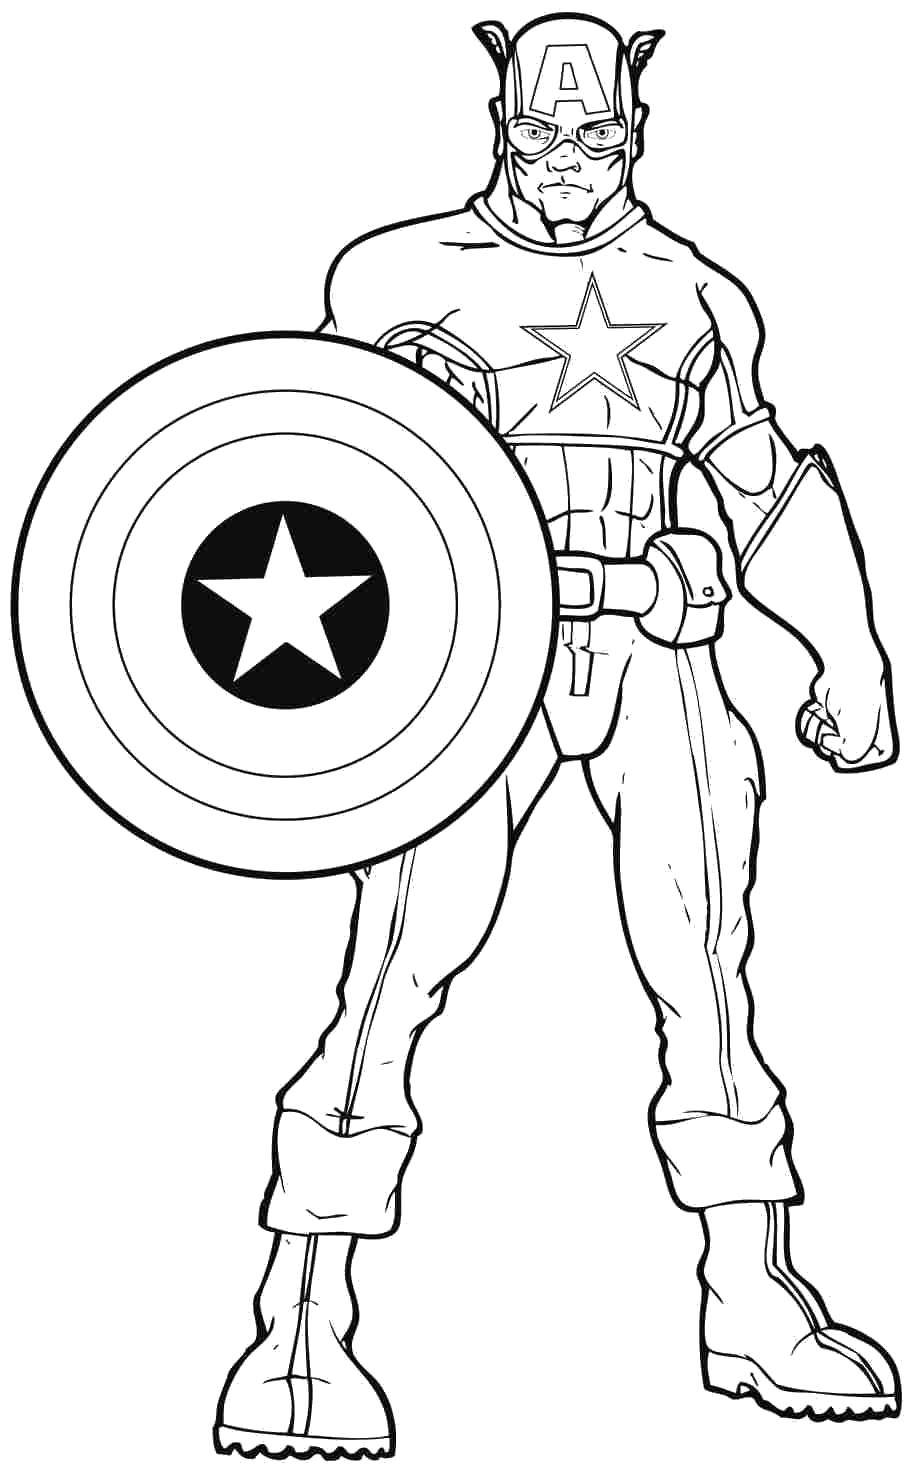 Coloring Captain America. Category Comics. Tags:  Comics, Captain America.